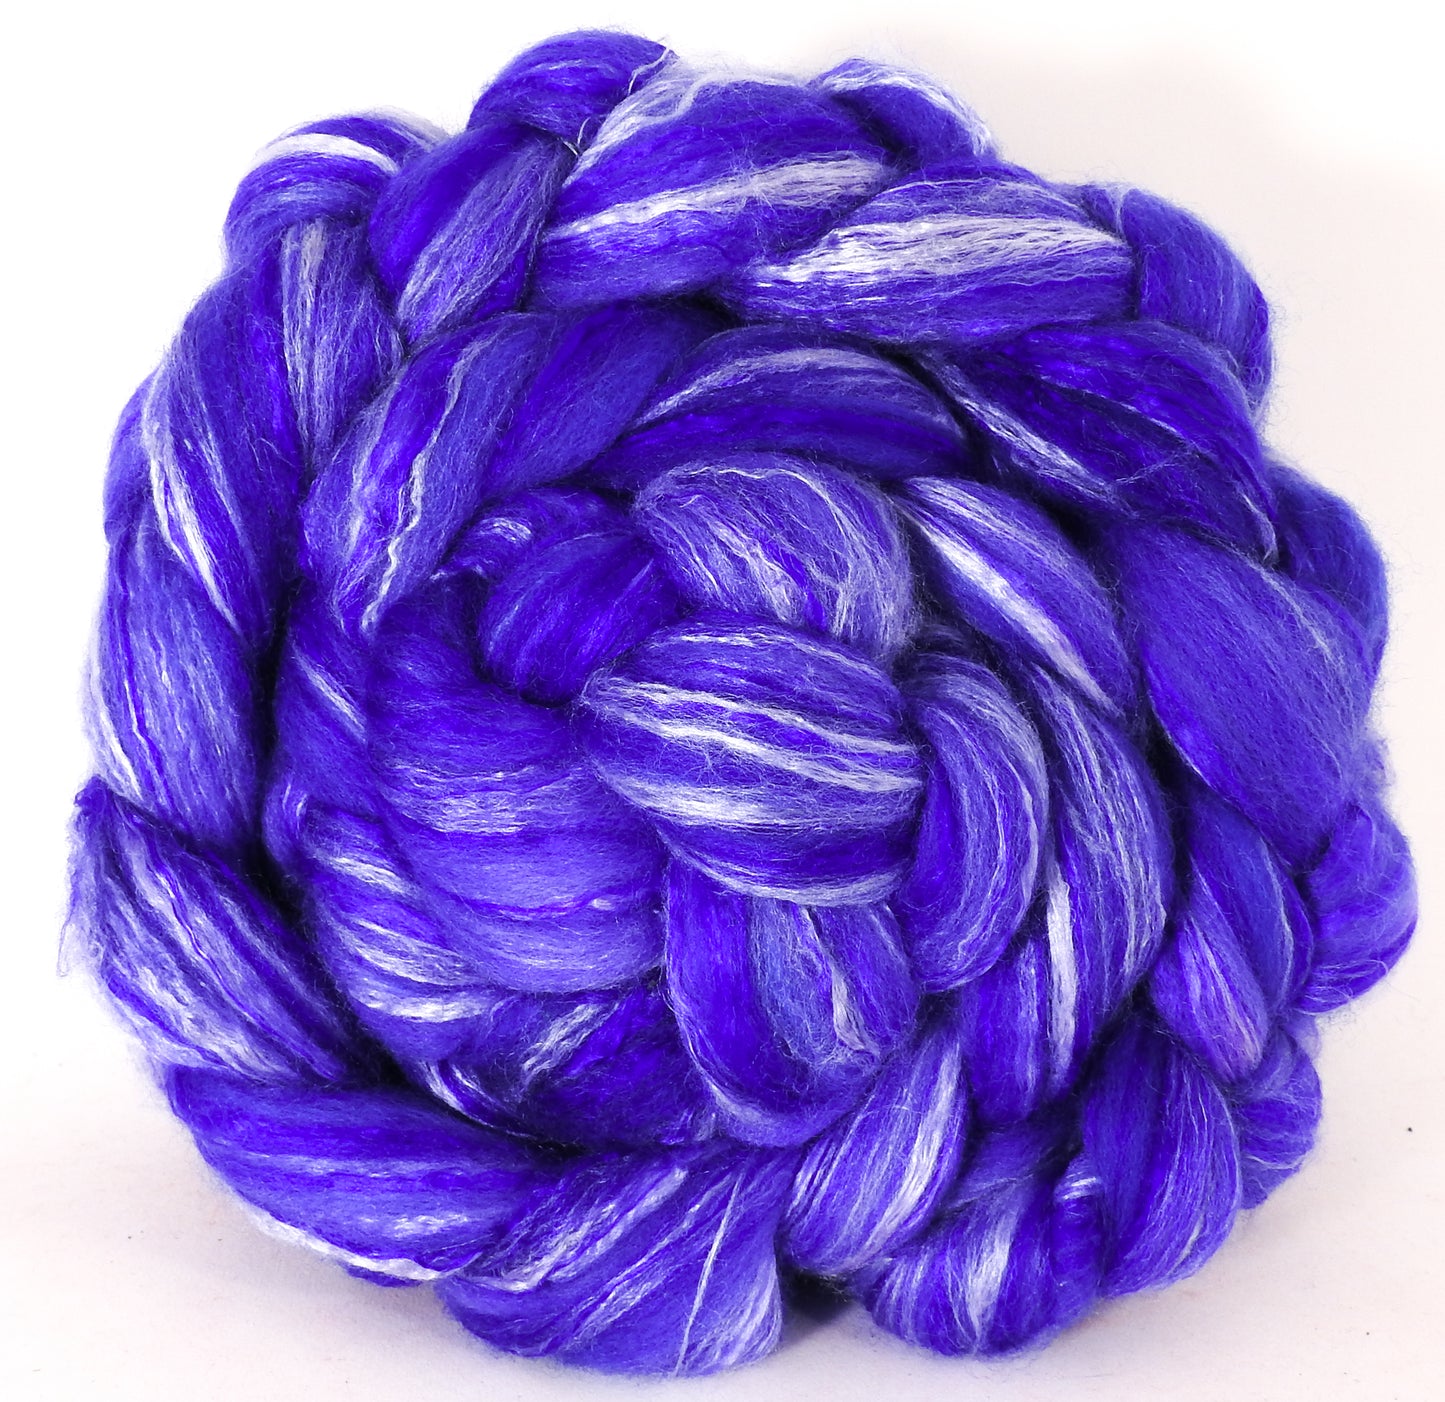 Batt in a Braid #45 - Cornflower (5.4 oz.) - Corriedale/Mulberry Silk/Rose Fiber (60/20/20) - Inglenook Fibers